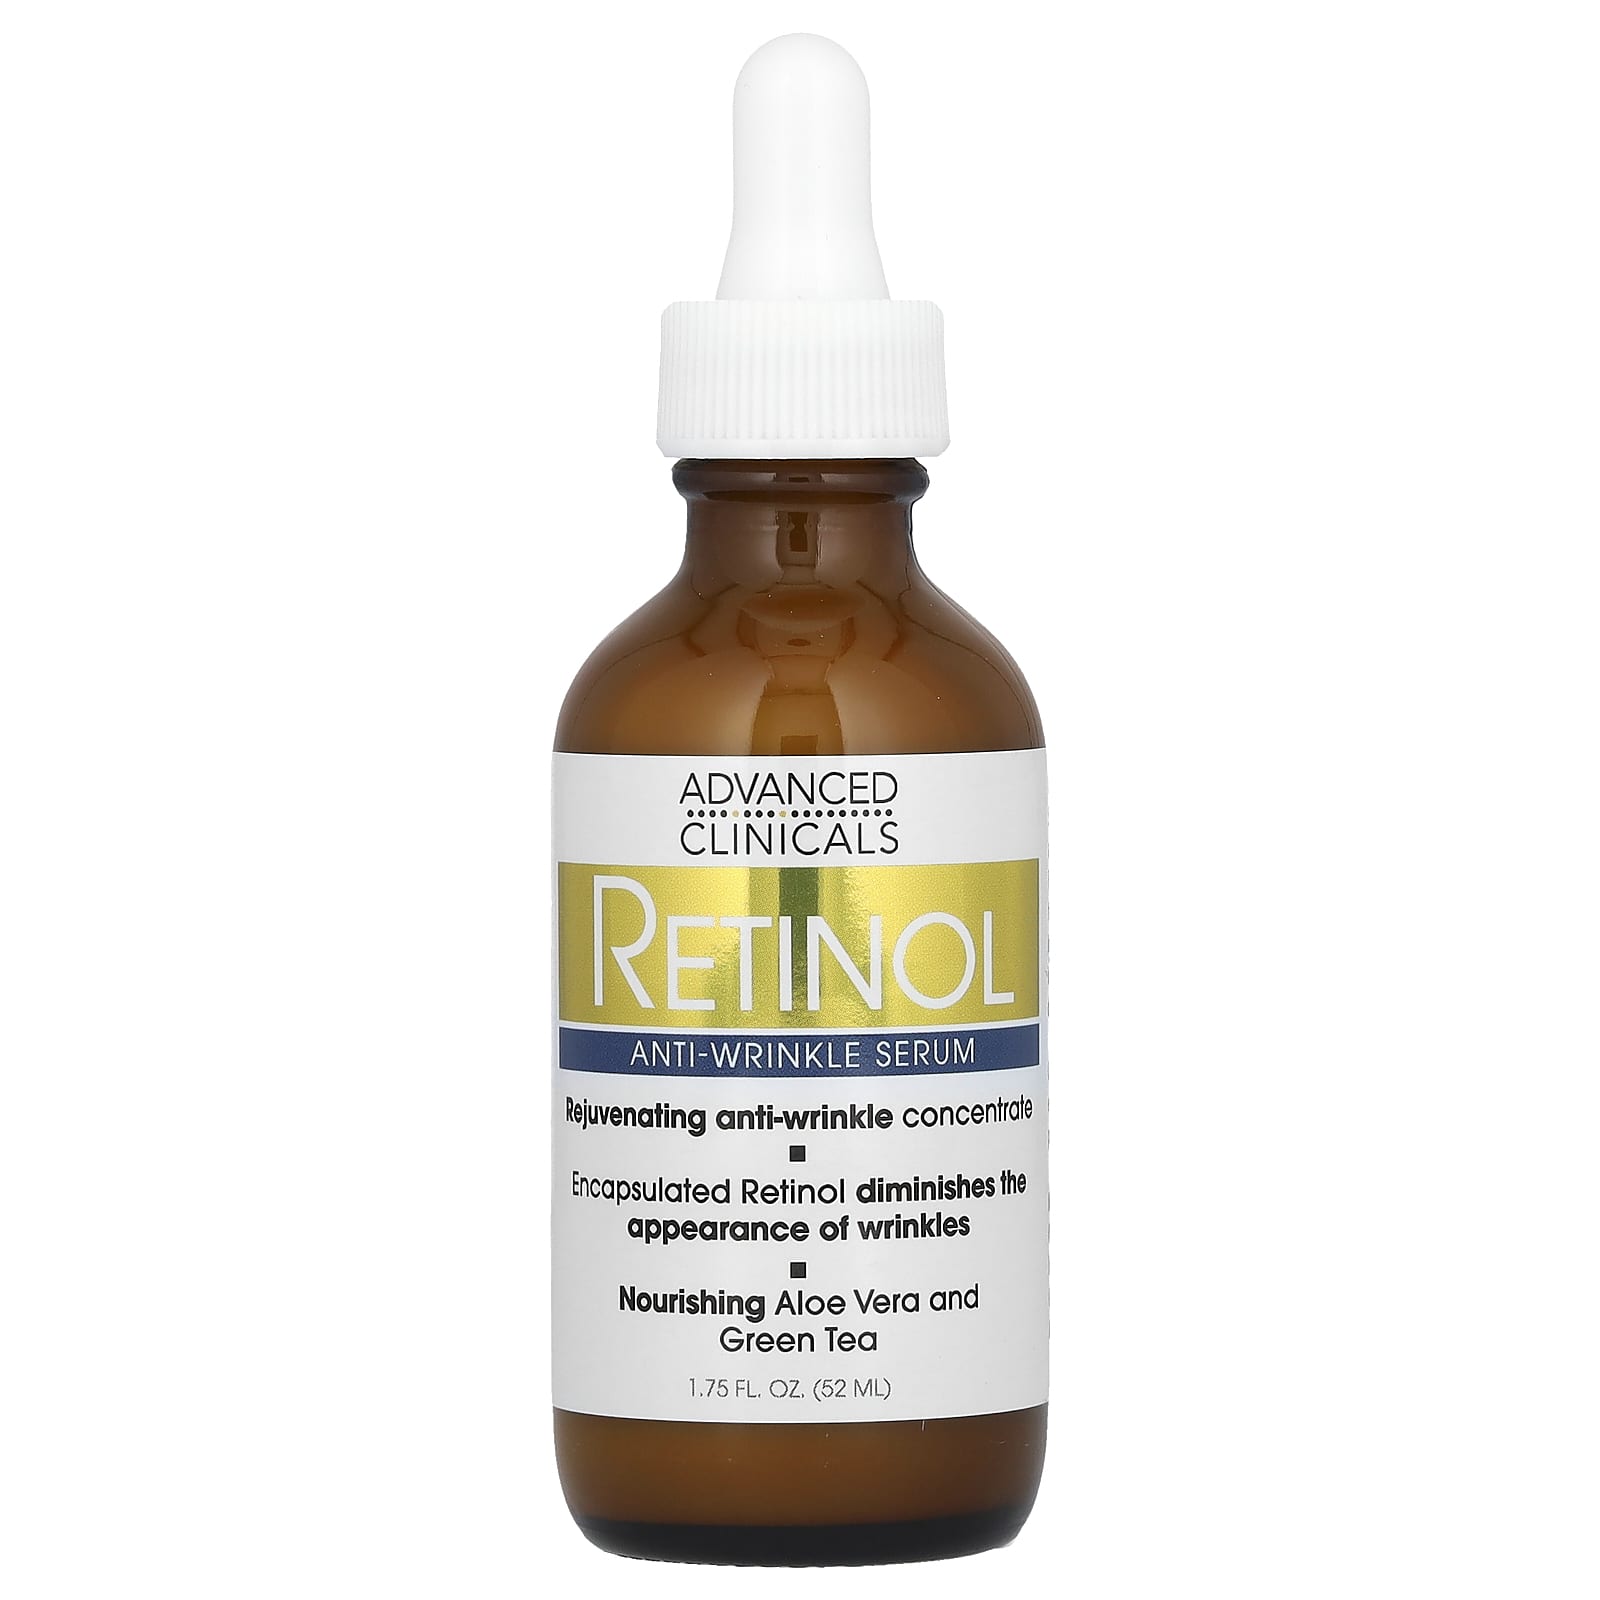 Retinol Serum, Anti-Wrinkle, 1.75 fl oz (52 ml)